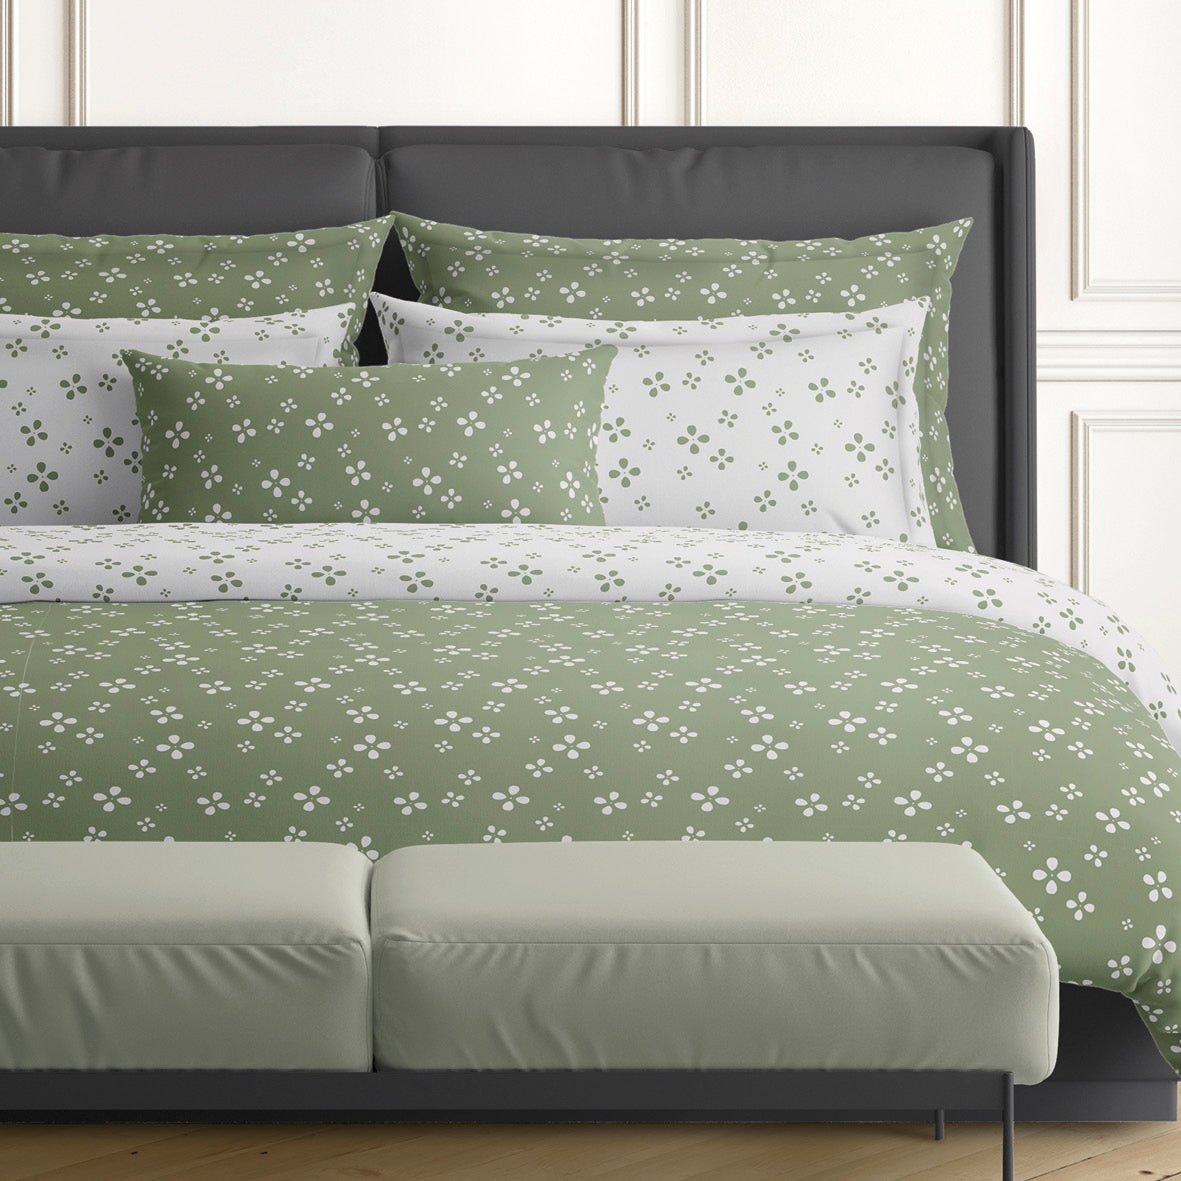 Pillowcase(s) cotton satin - Mirabelle Green